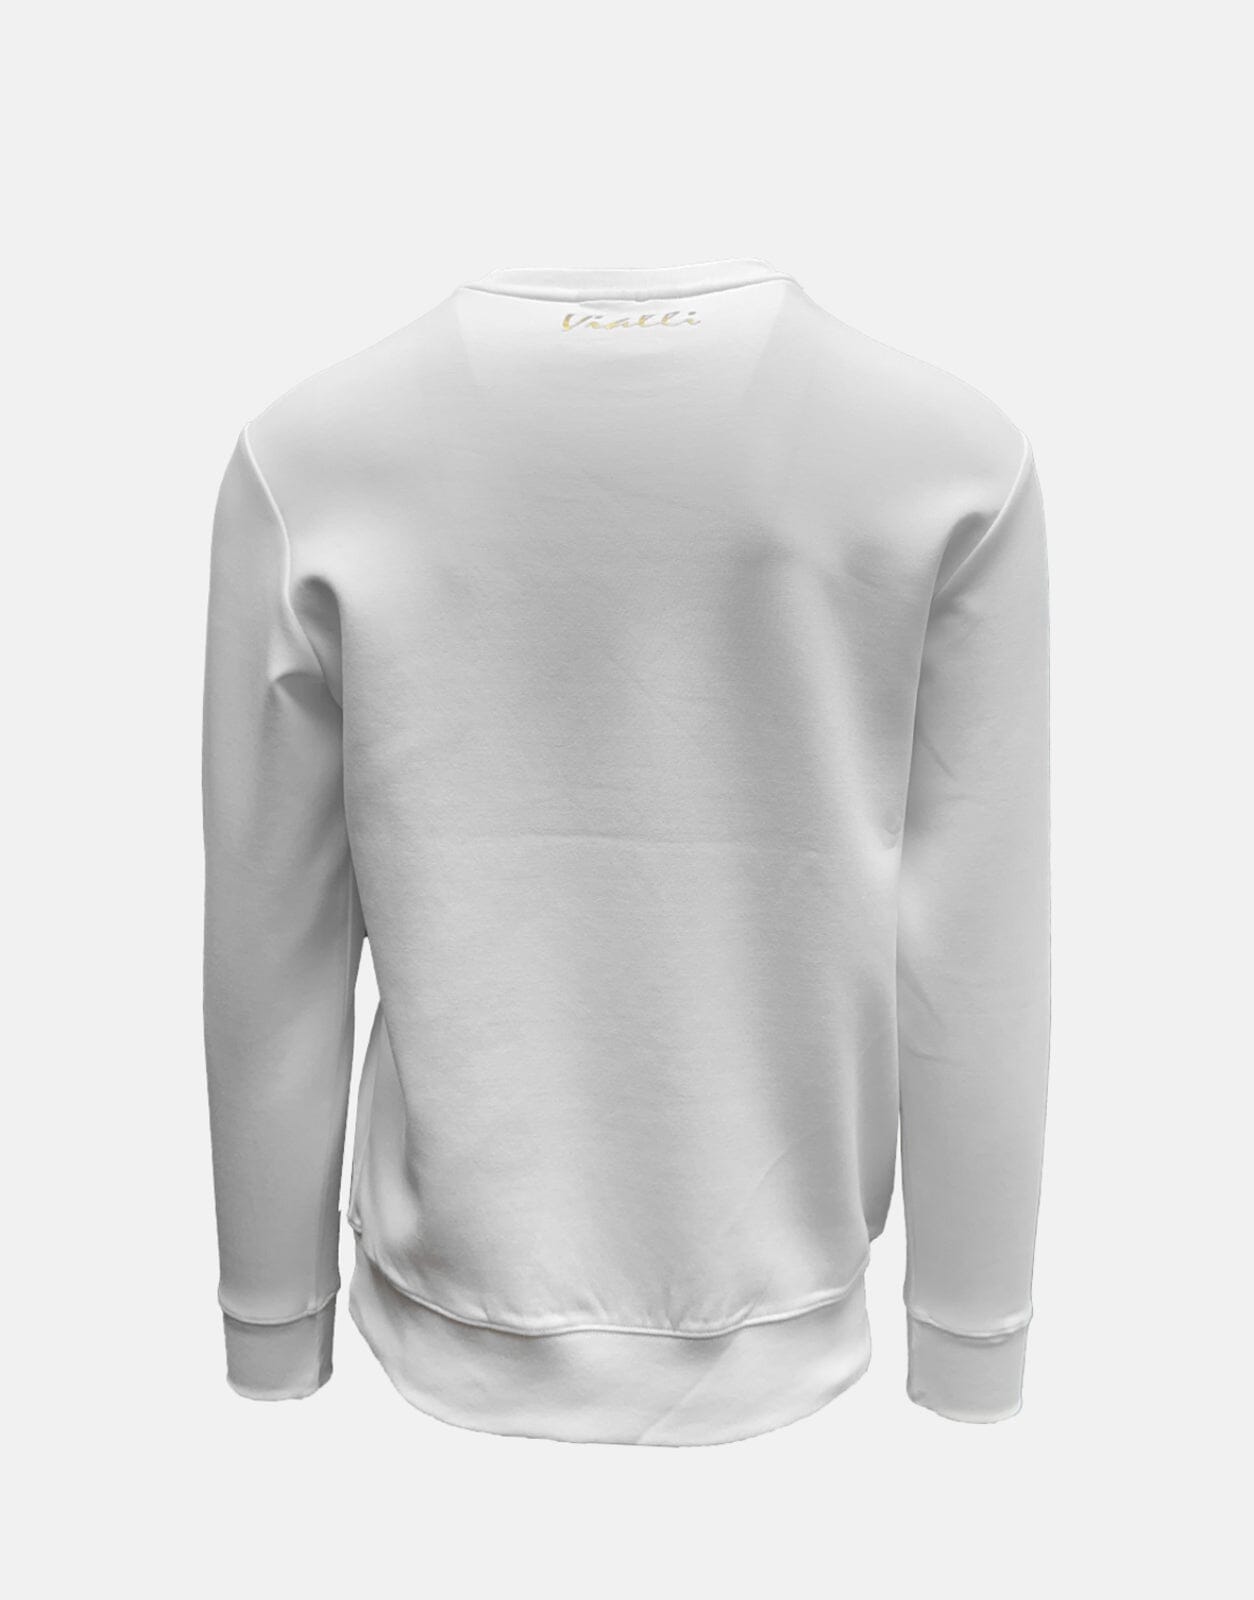 Vialli Gelato White Sweatshirt - Subwear